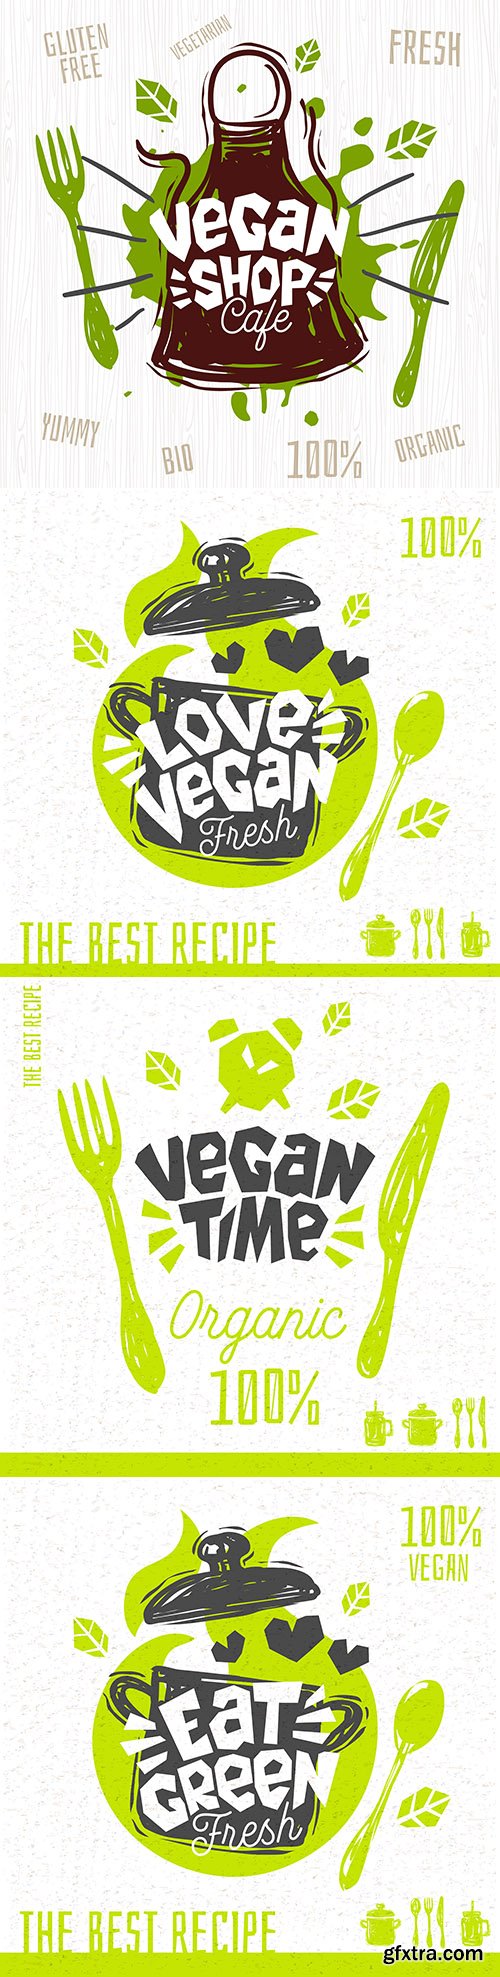 Vegan shop cafe logo fresh organic hand painted
